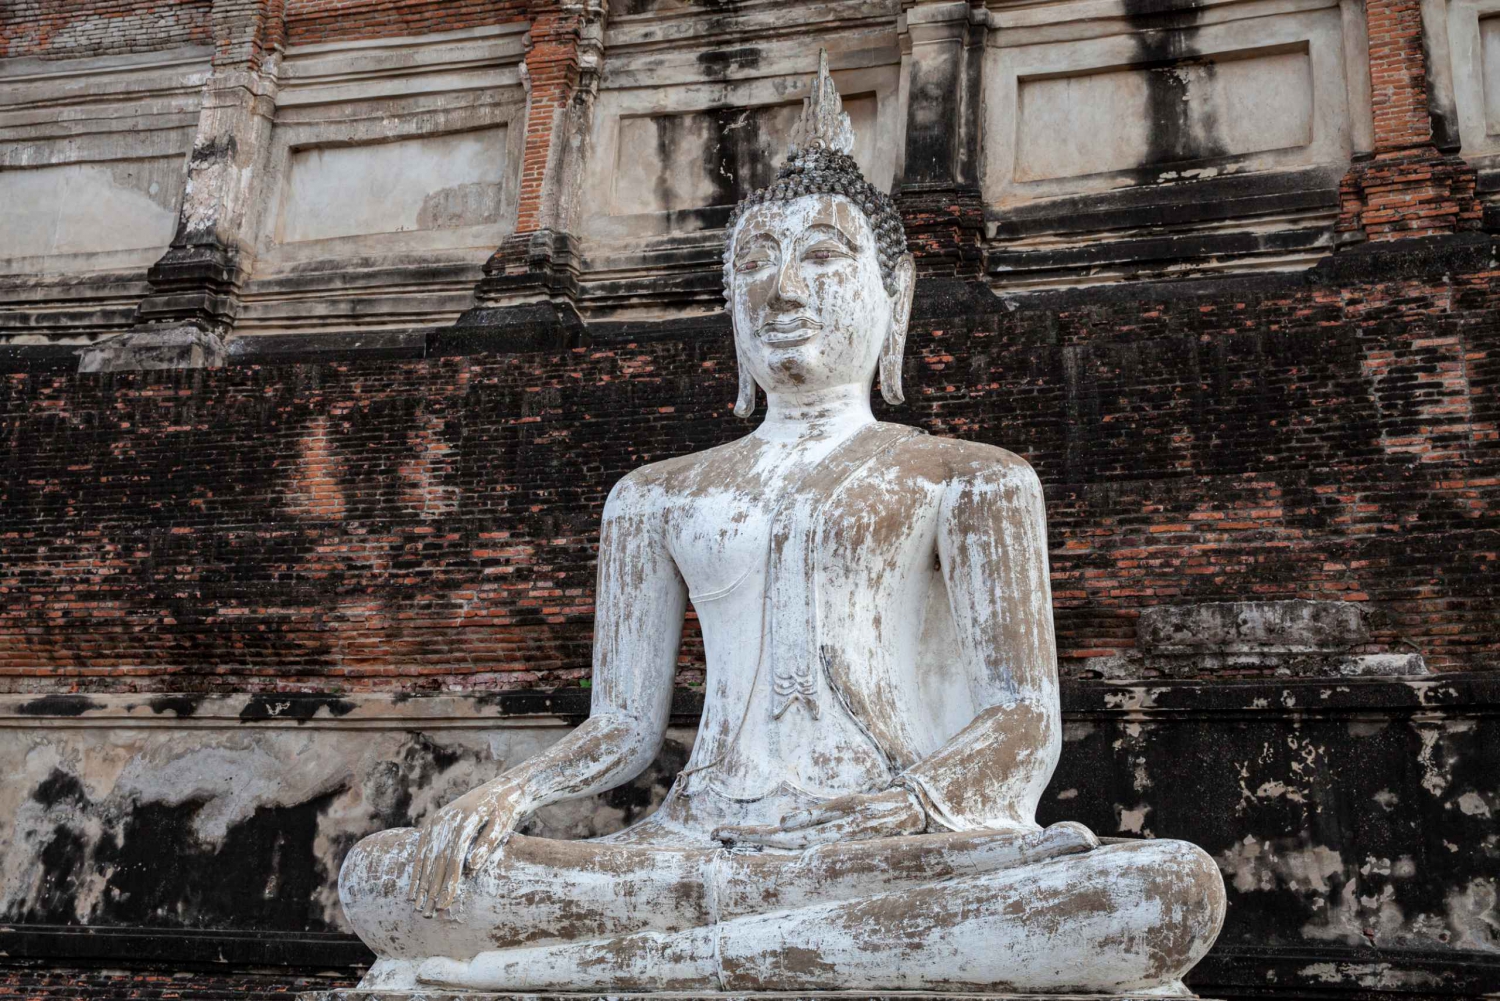 From Bangkok: Private Tour to Ayutthaya & Summer Palace